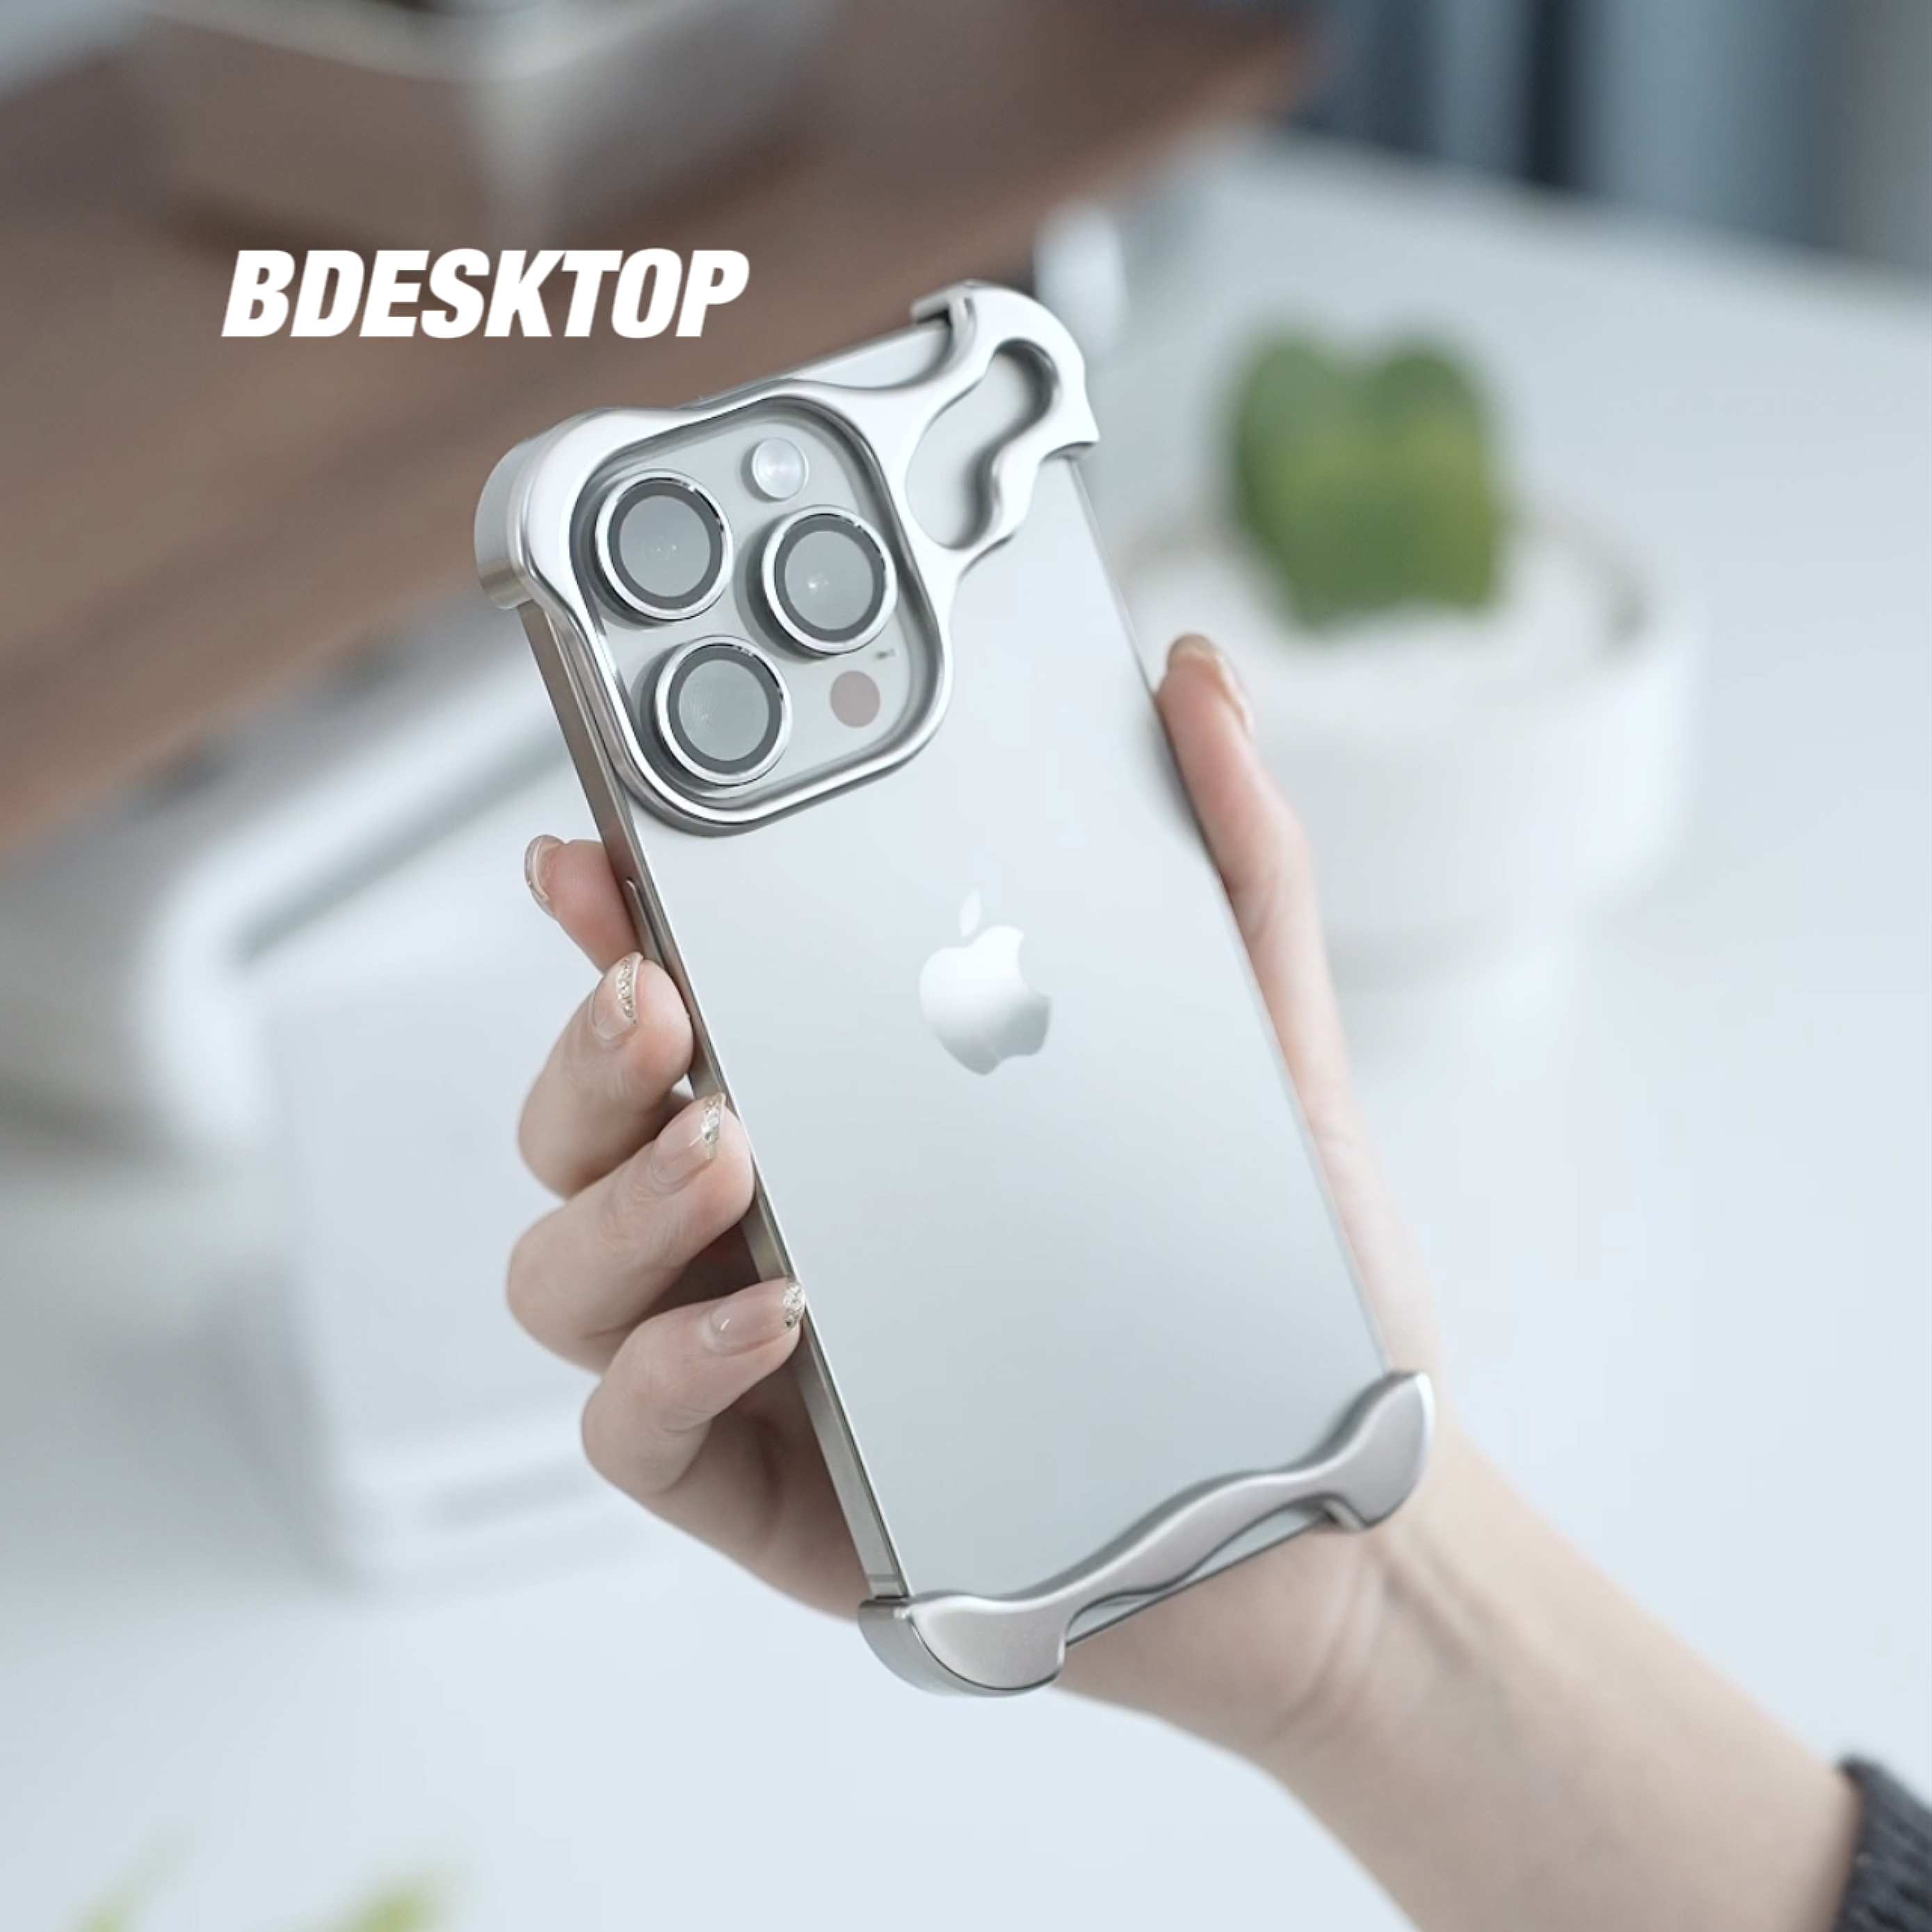  Bdesktop Design Shop｜Alien-shaped zinc alloy protective case for iPhone, providing a metallic bare machine feel